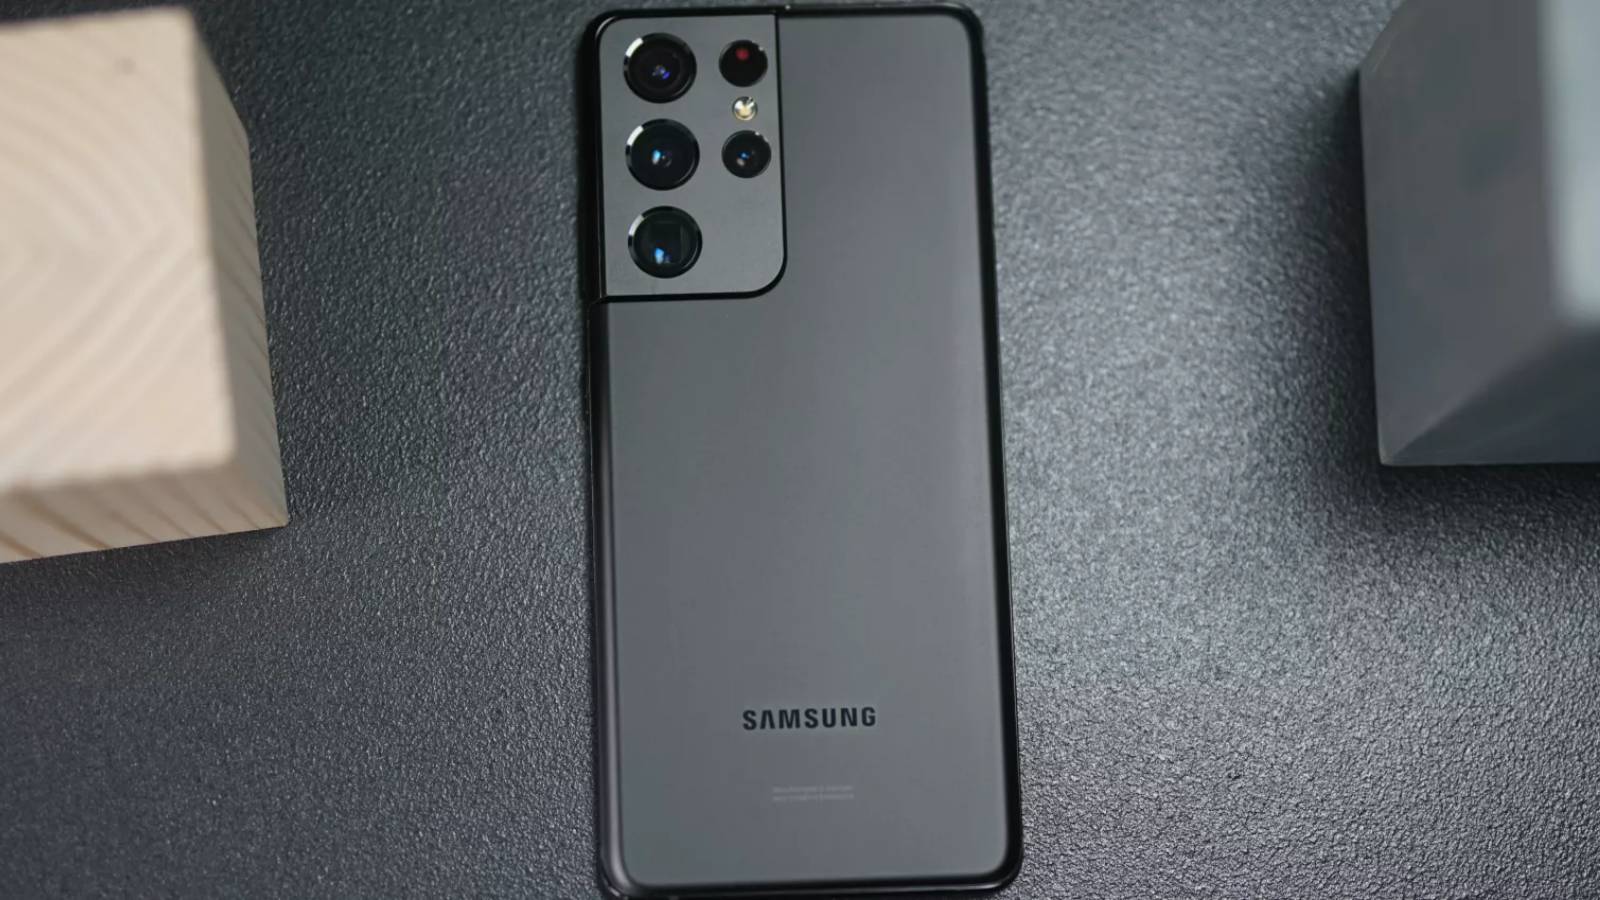 Samsung GALAXY S21 eMAG 2100 LEI Rabatt